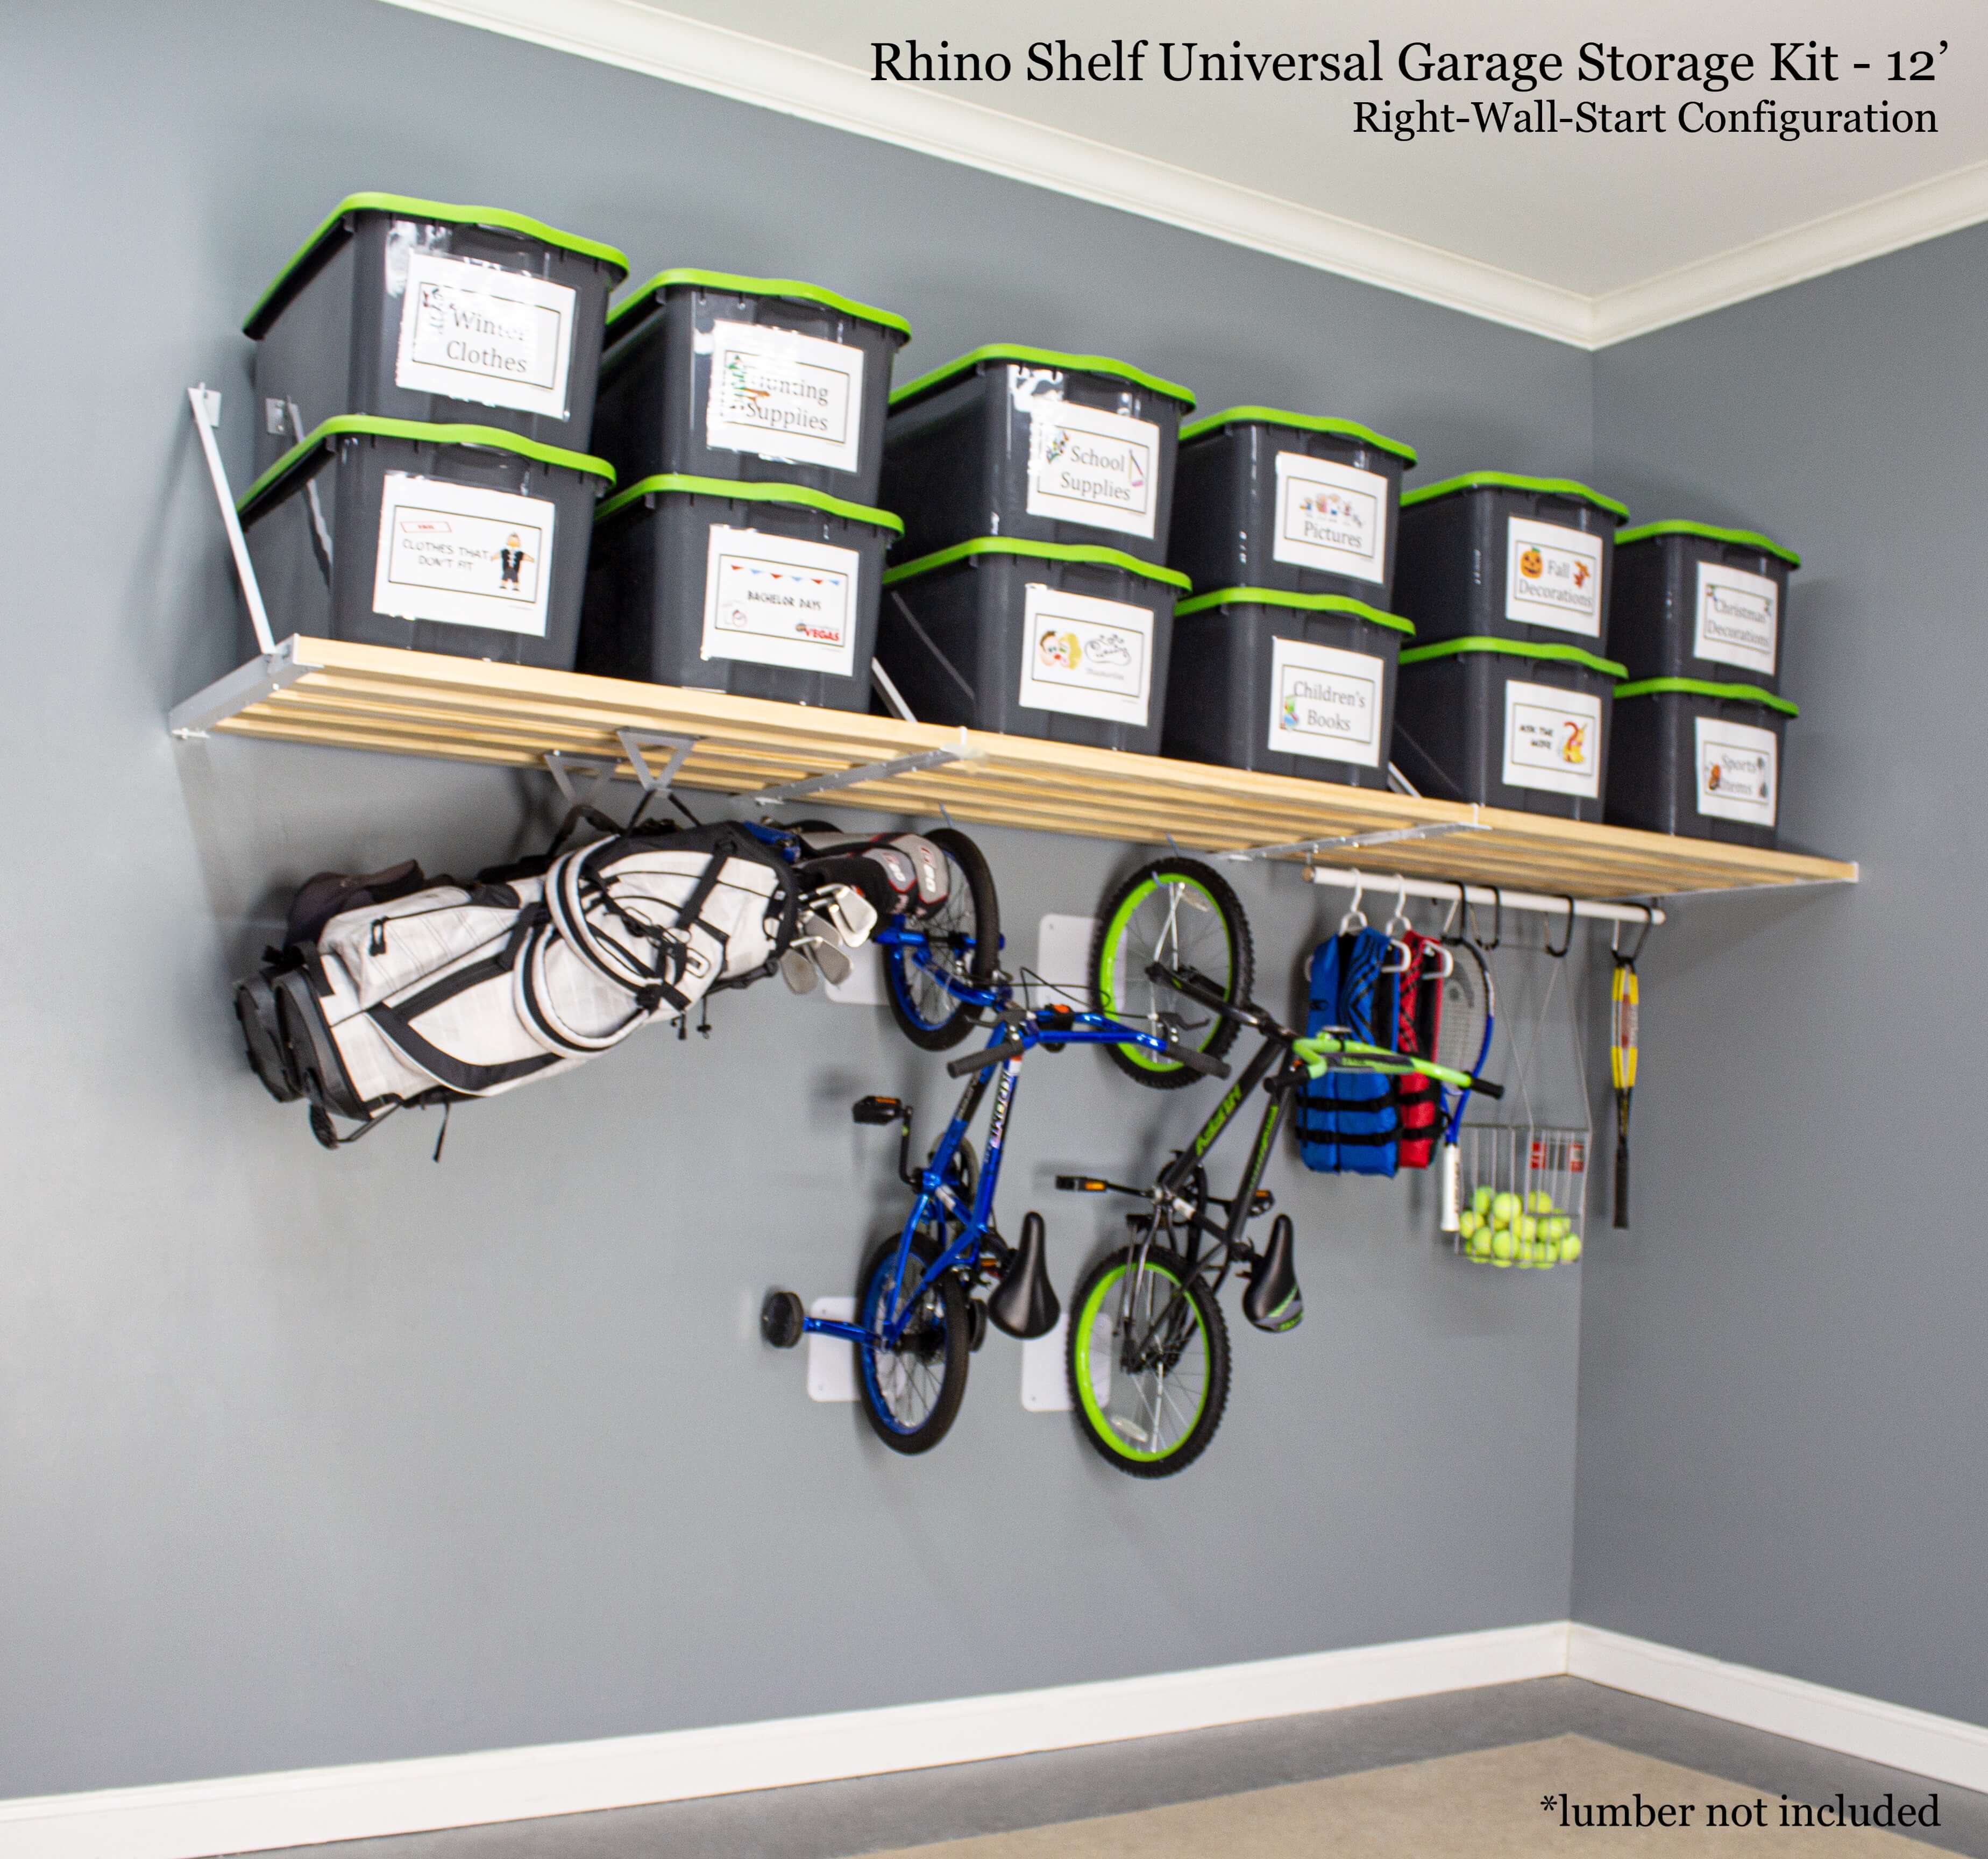 Rhino Shelf Universal Garage Storage Kit - 12 ft RWS